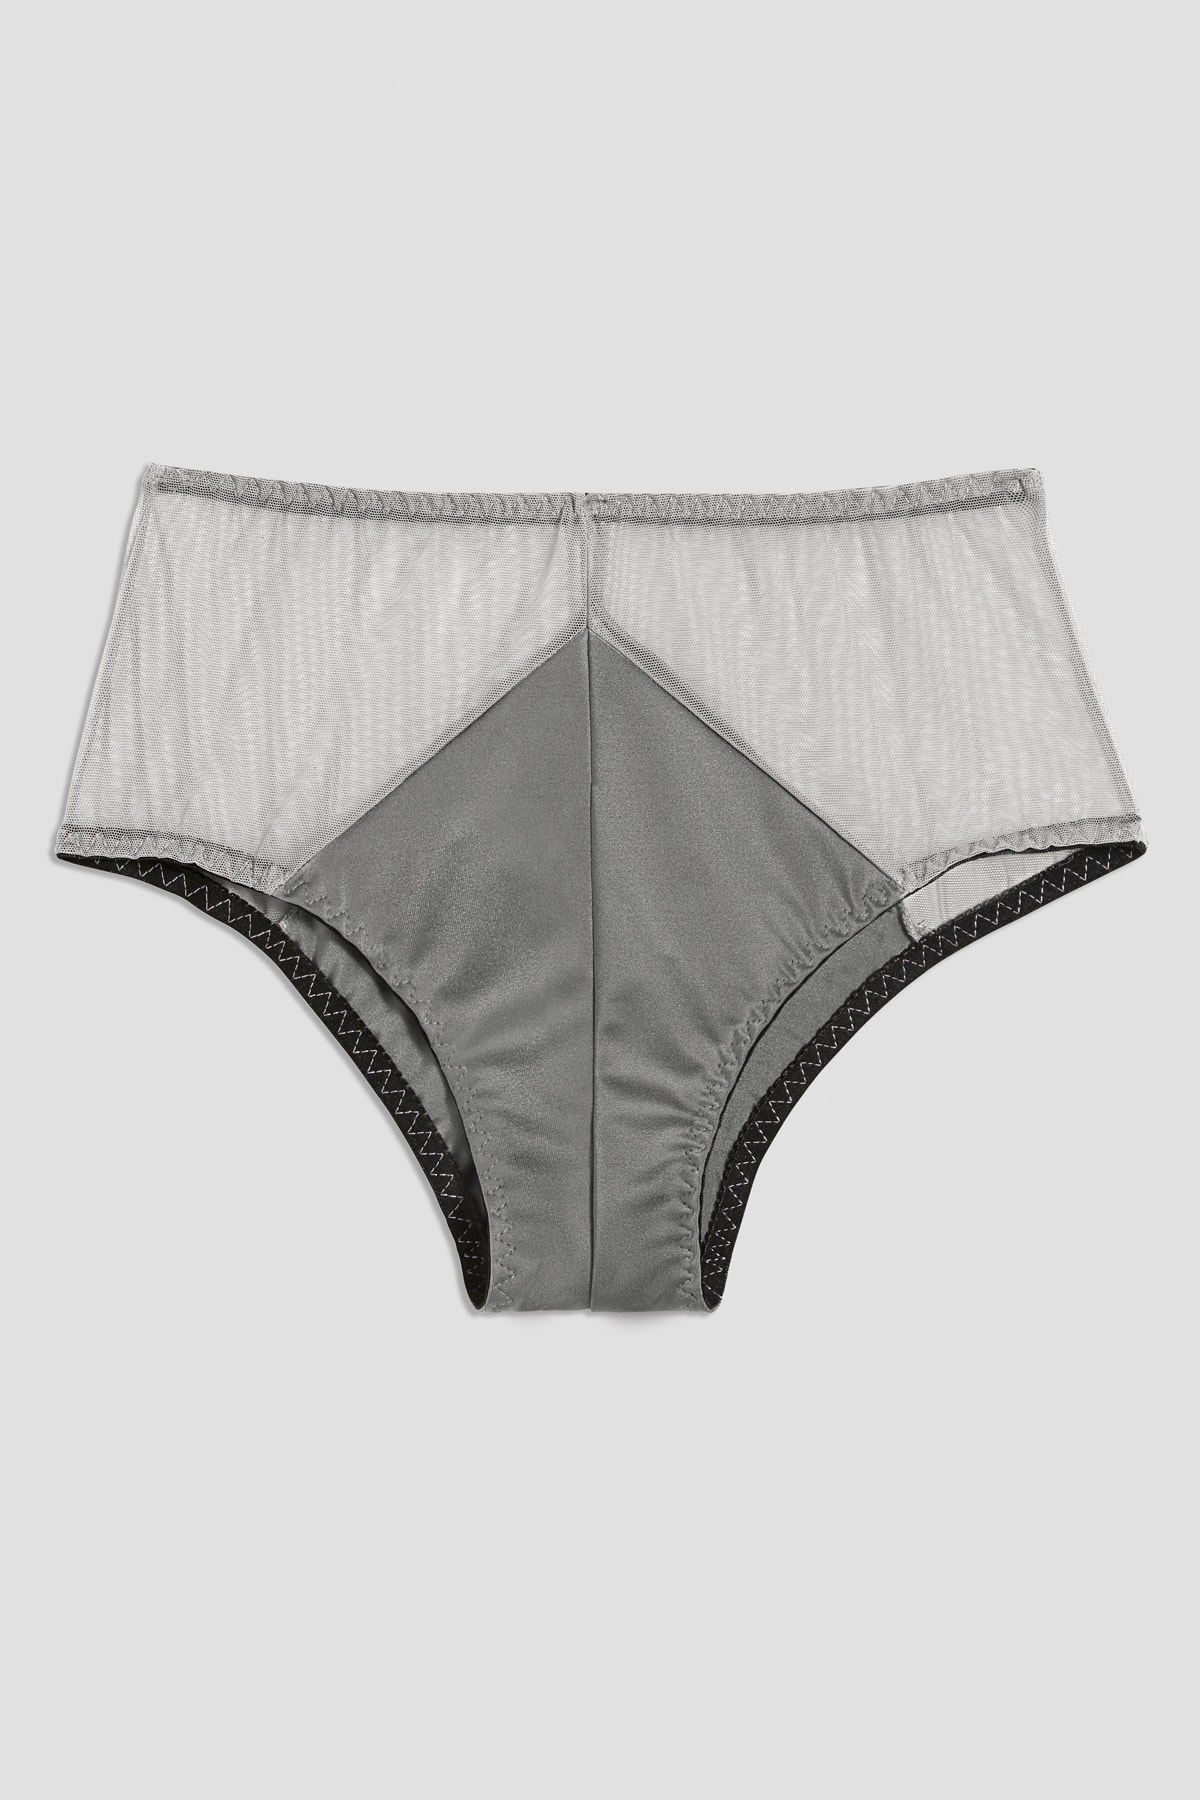 Frank and Oak Sokoloff Lingerie Underwear Grey Brief